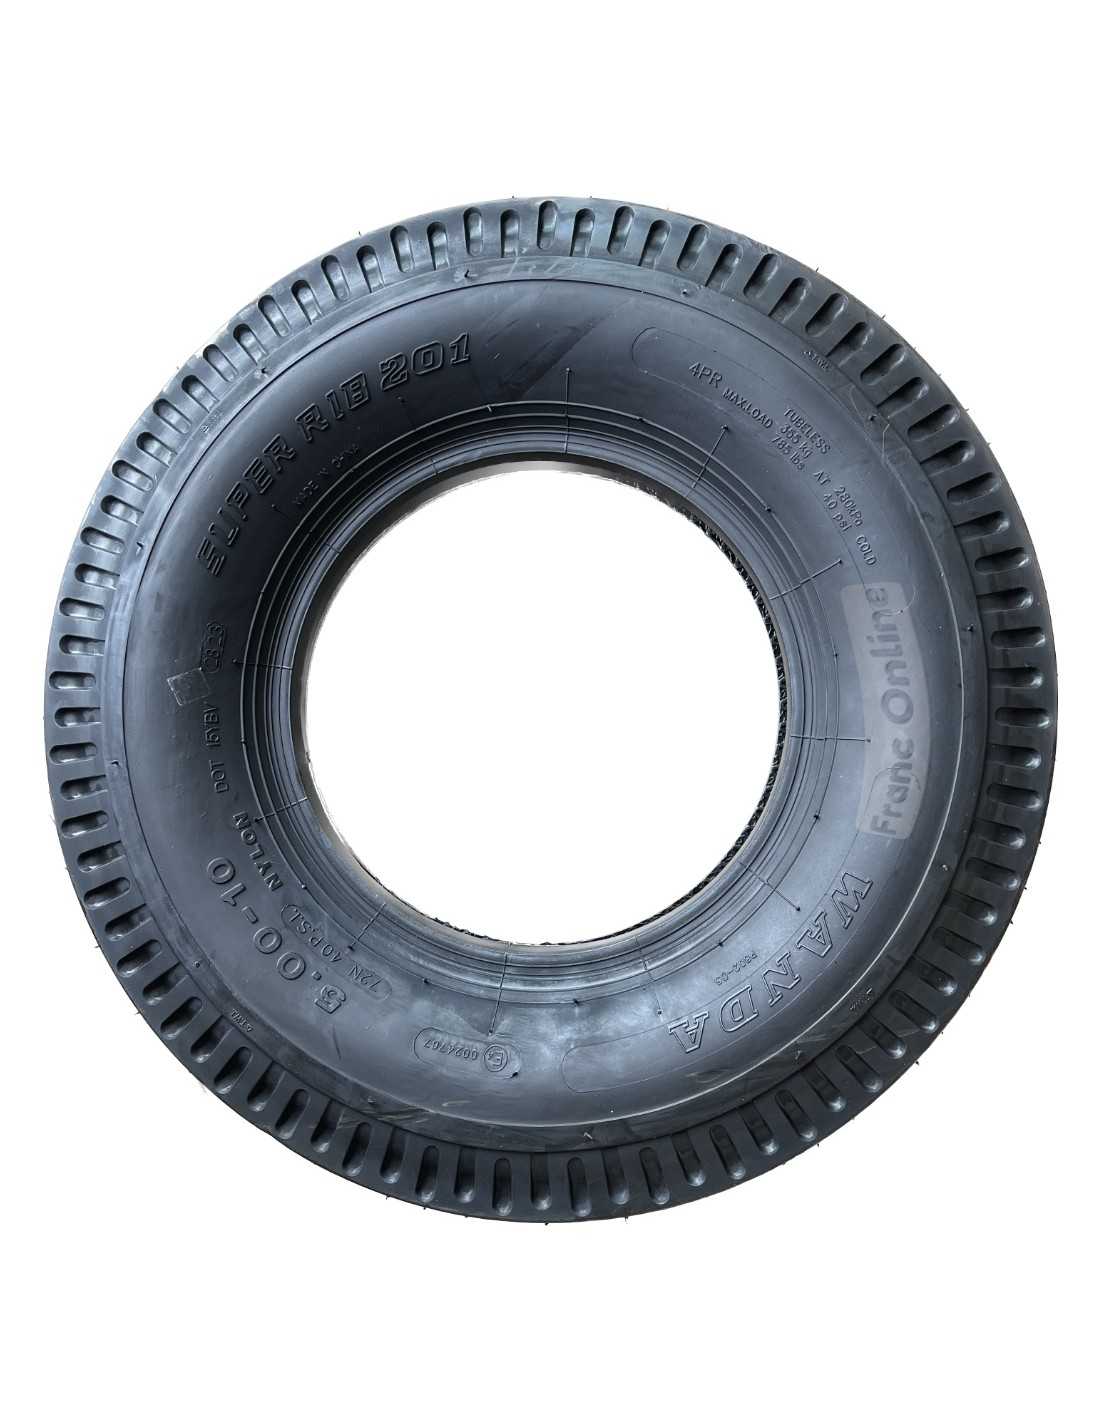 Chambre à air pour pneu de remorque 4.80 x 8 - Remorques Discount